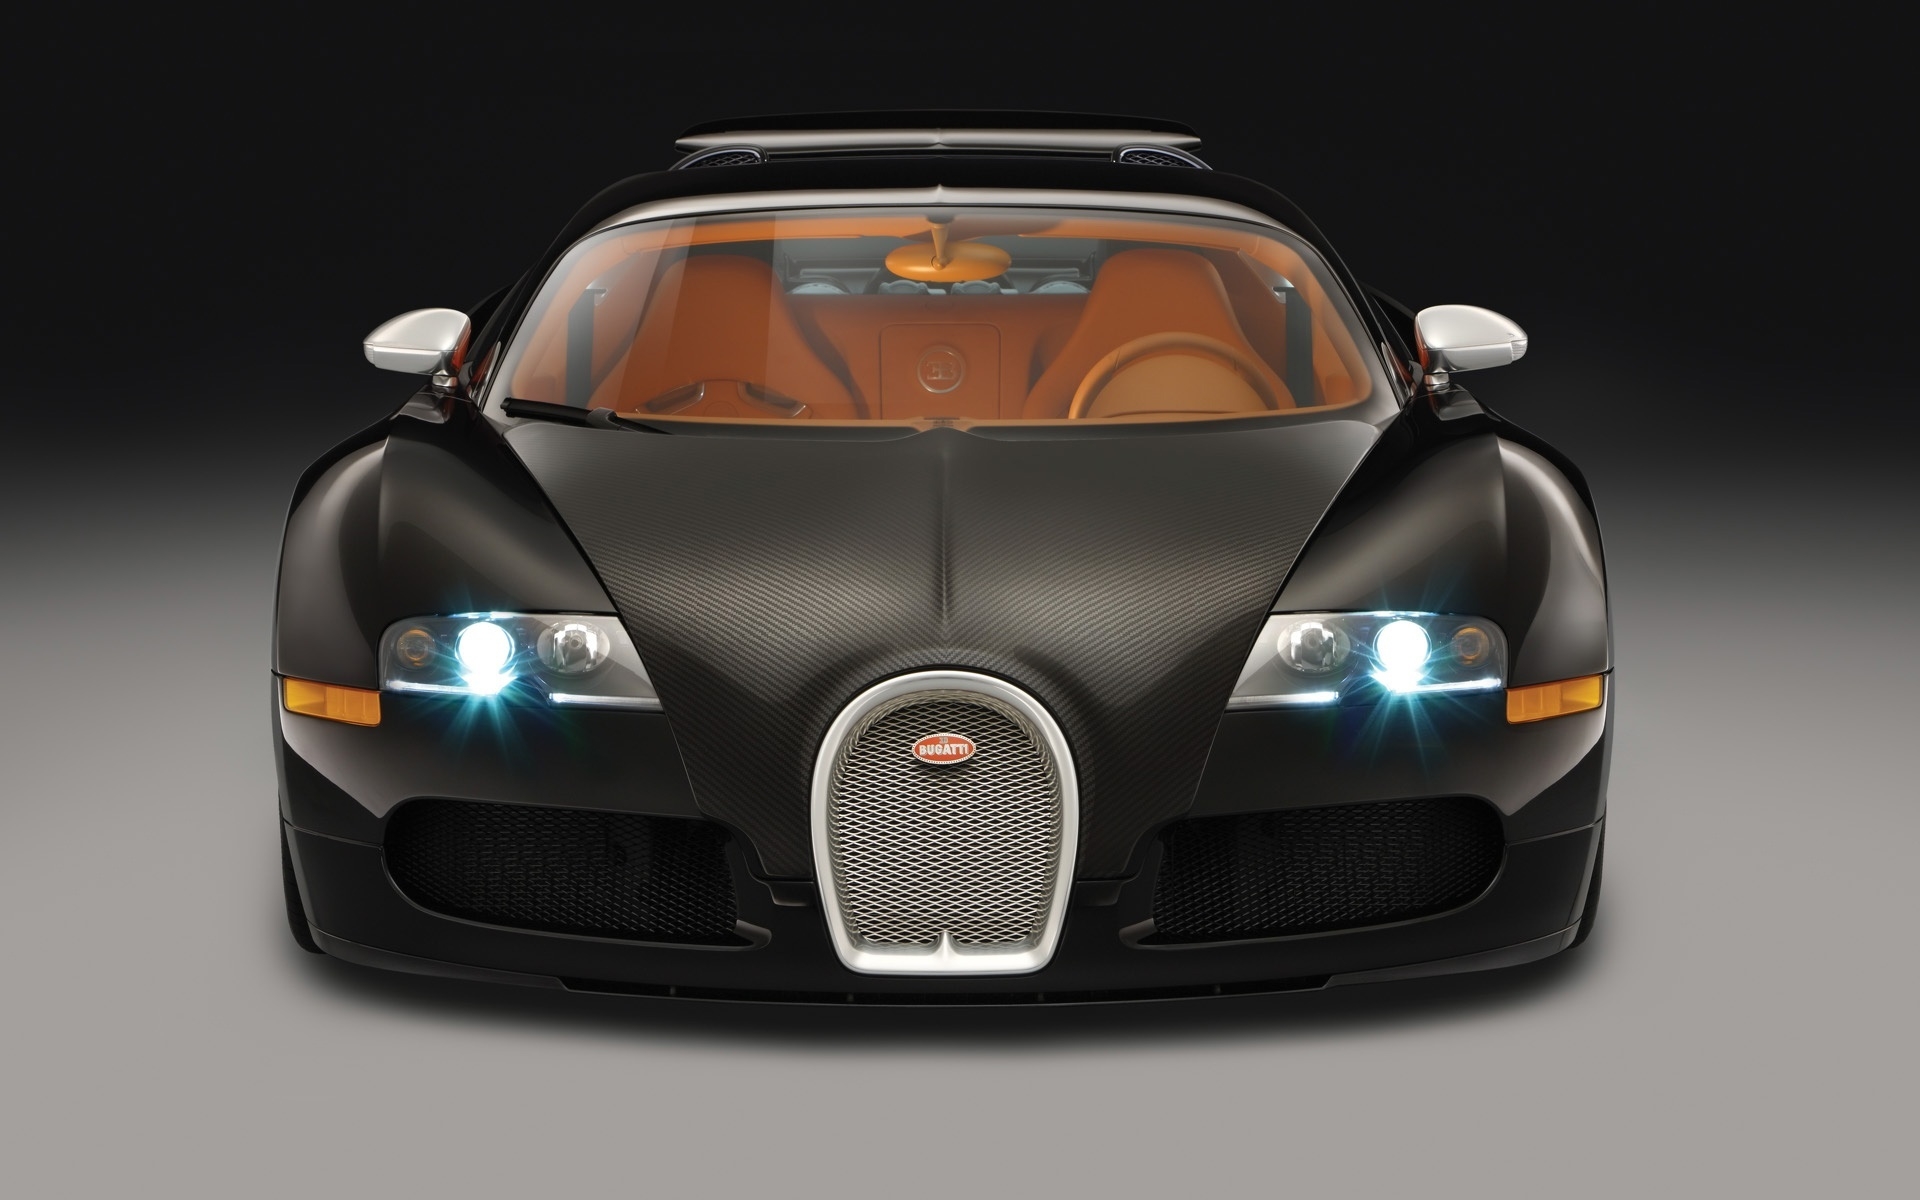 Bugatti Veyron Sang Noir 2008 - Front for 1920 x 1200 widescreen resolution